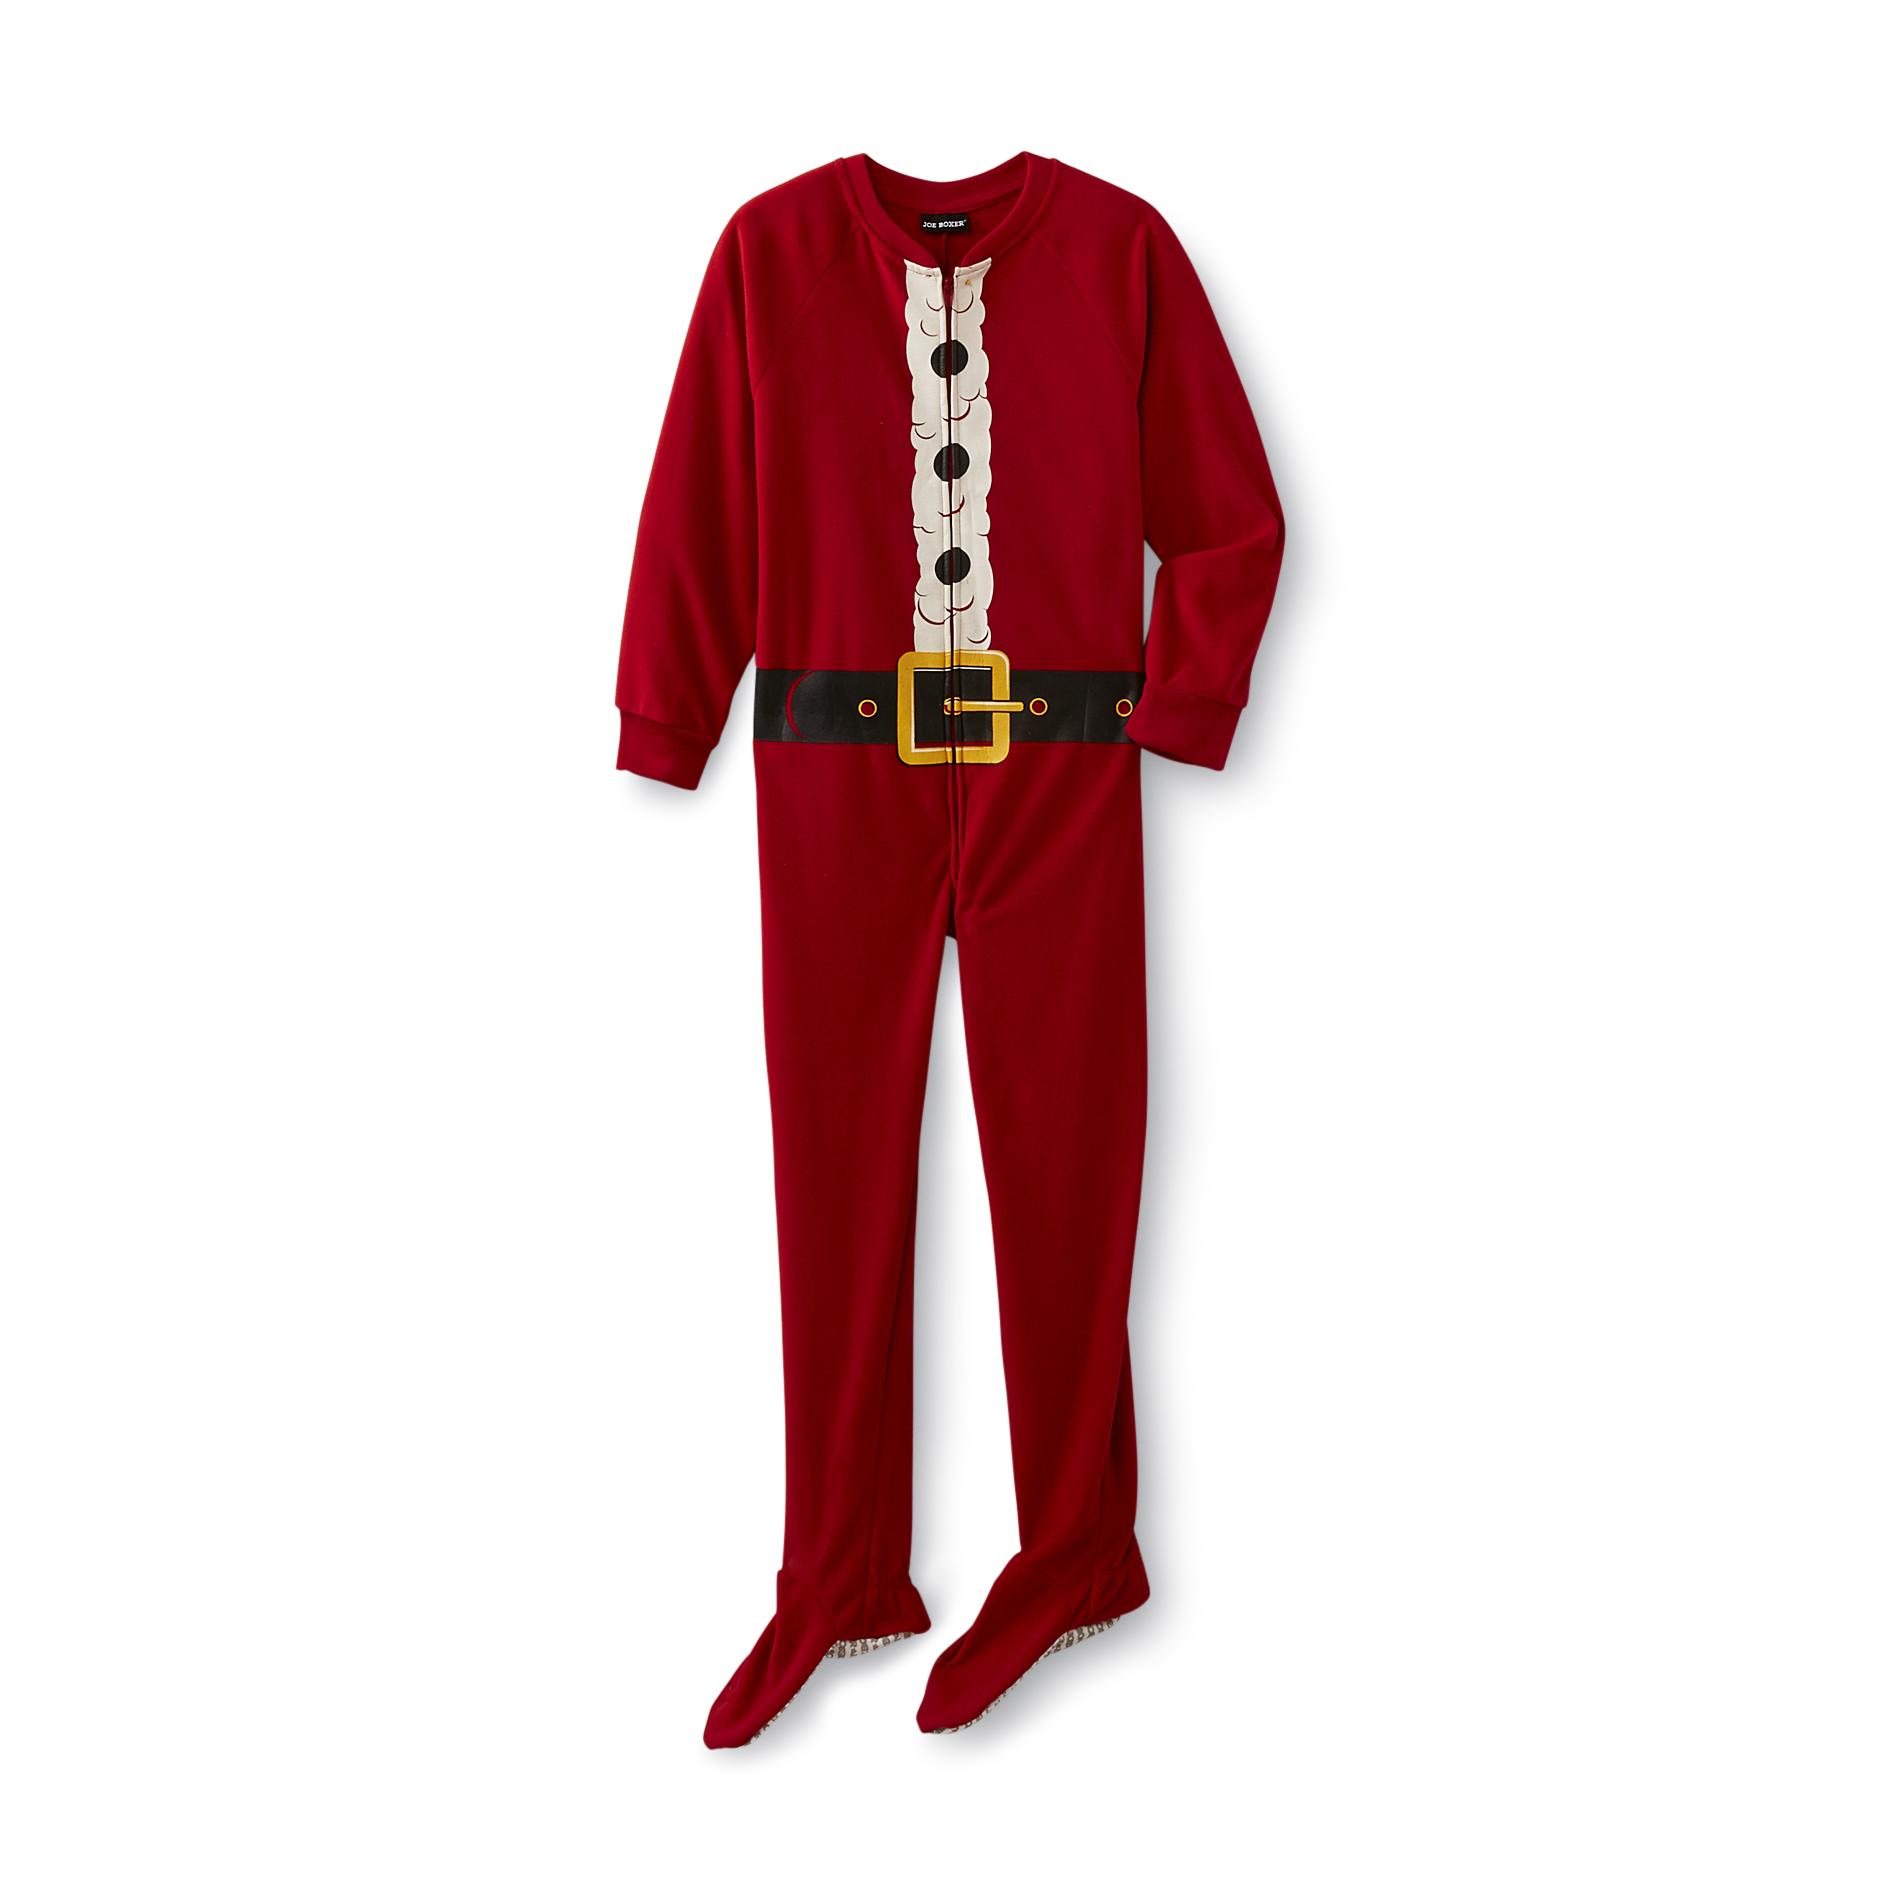 Joe Boxer Boy's Christmas Fleece Sleeper Pajamas - Santa